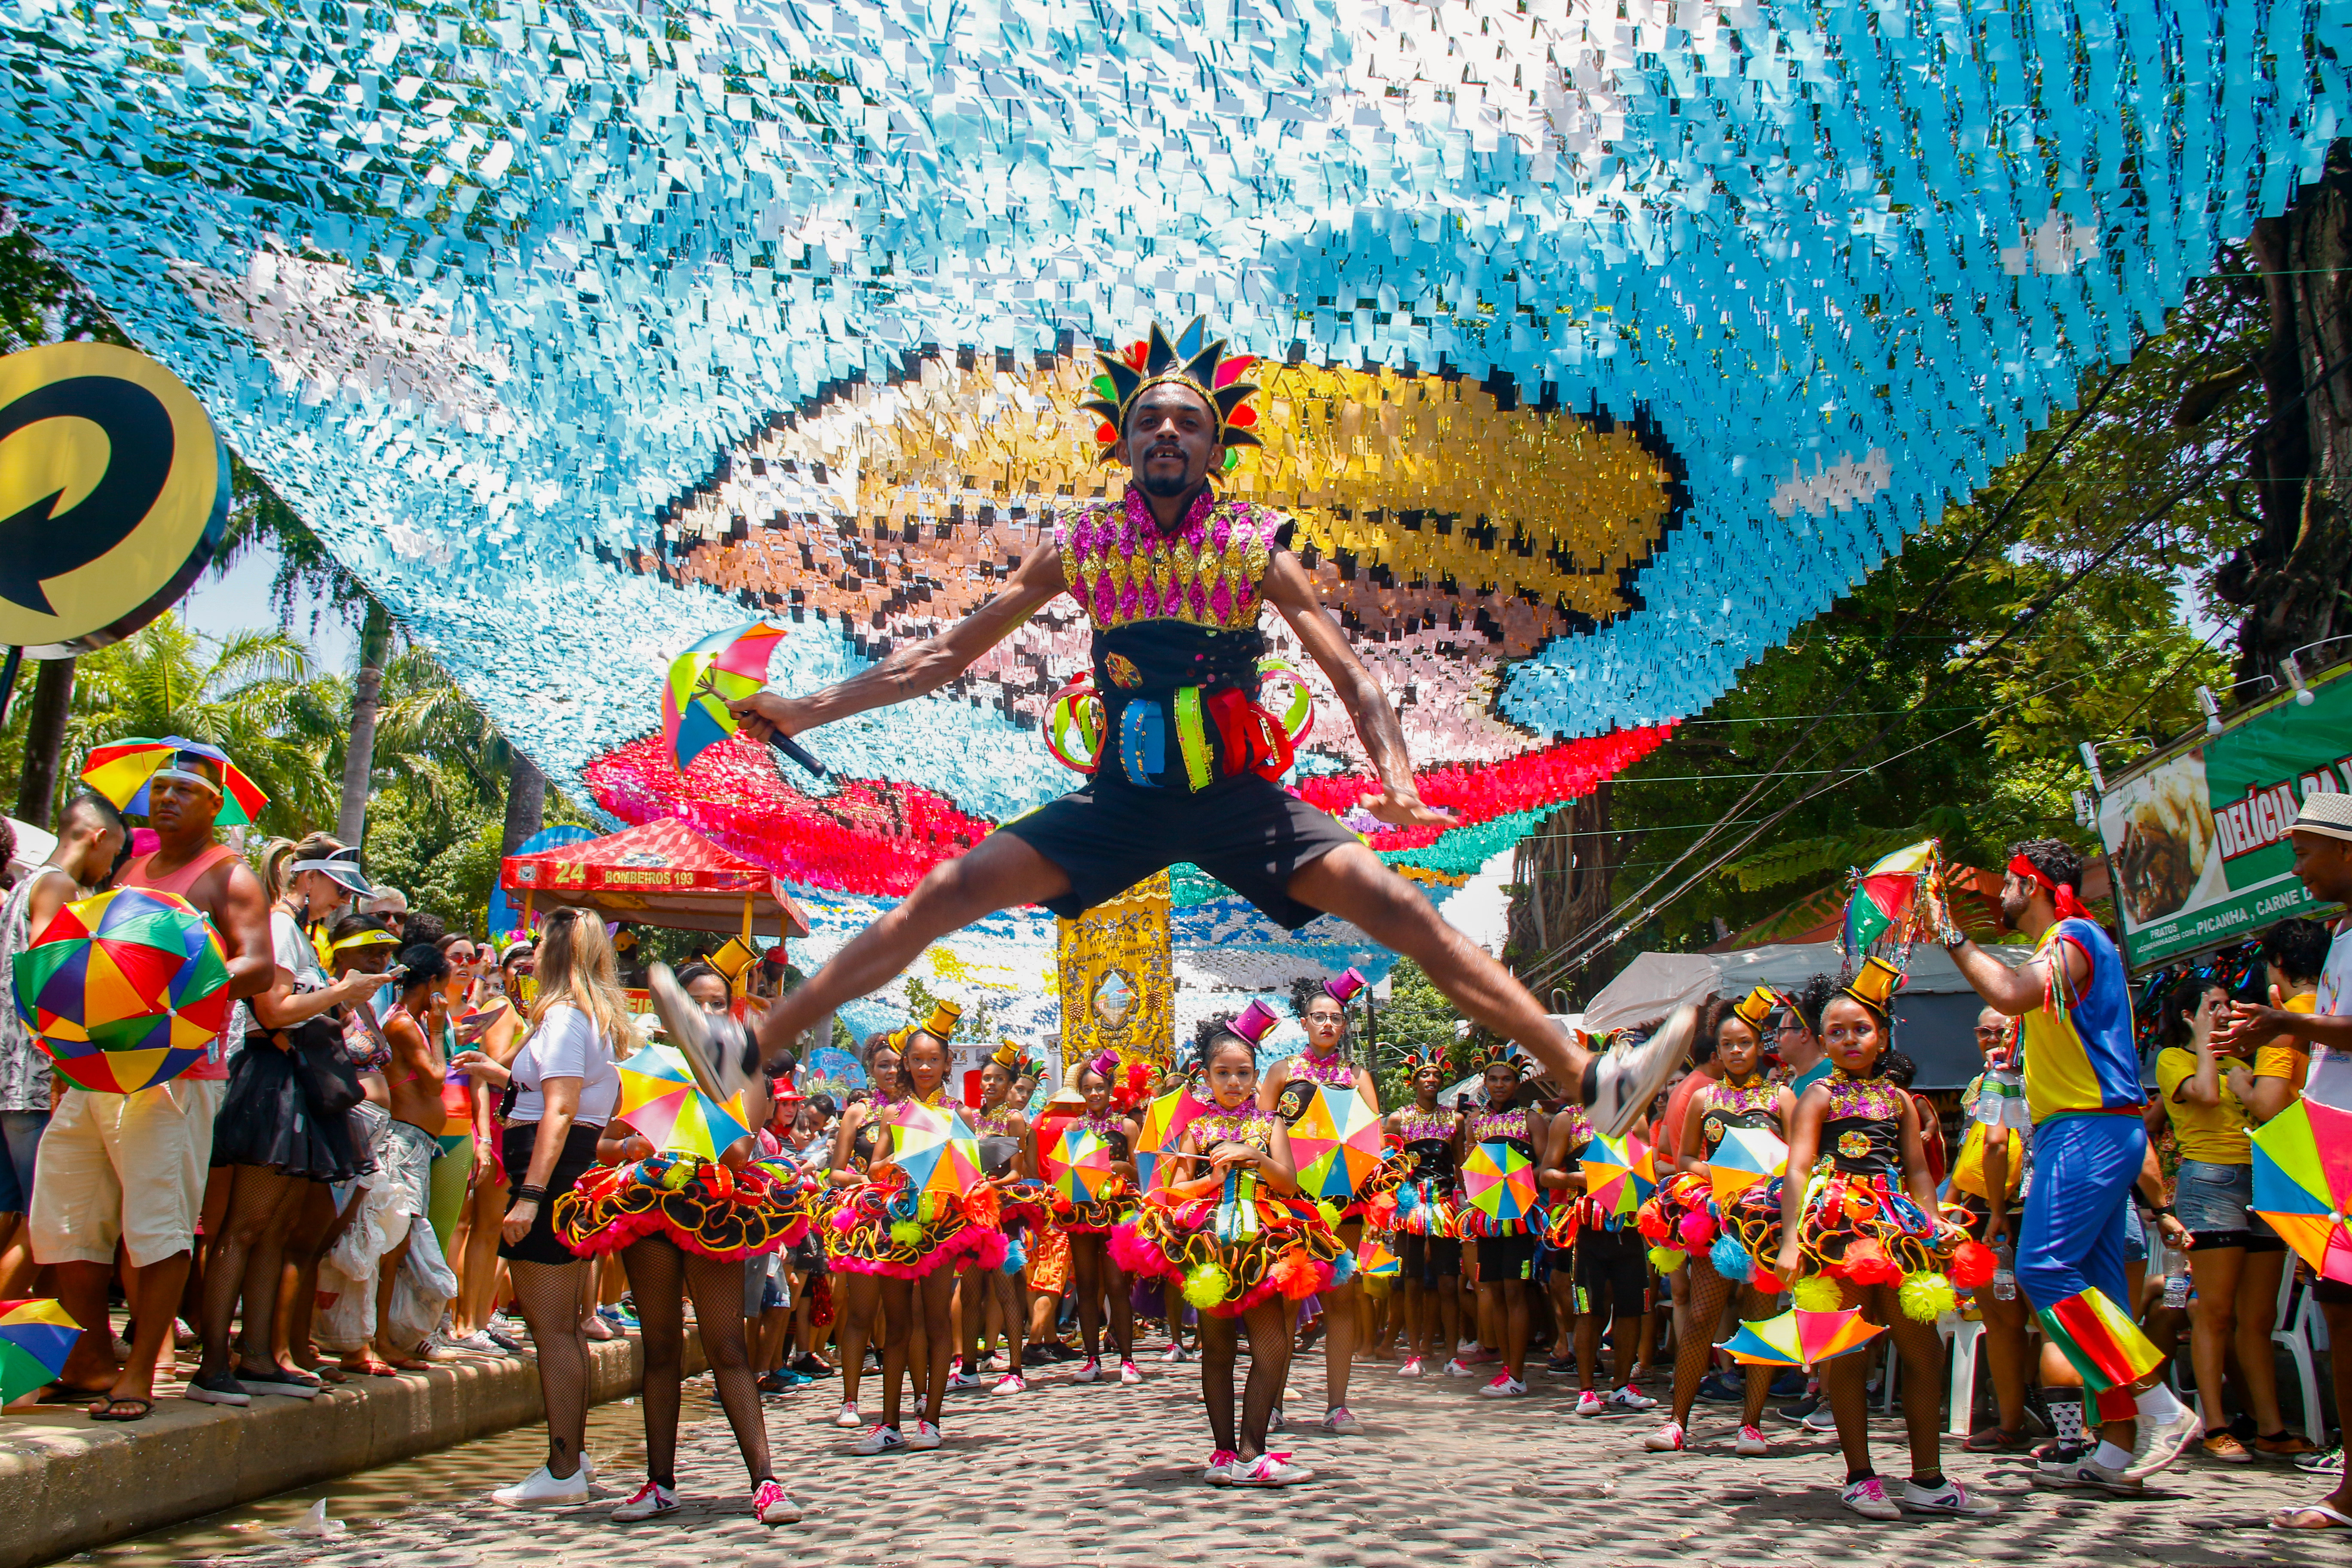 File:24.02.20 Segunda-Feira de Carnaval - Ruas de Olinda (49580016497).jpg  - Wikimedia Commons